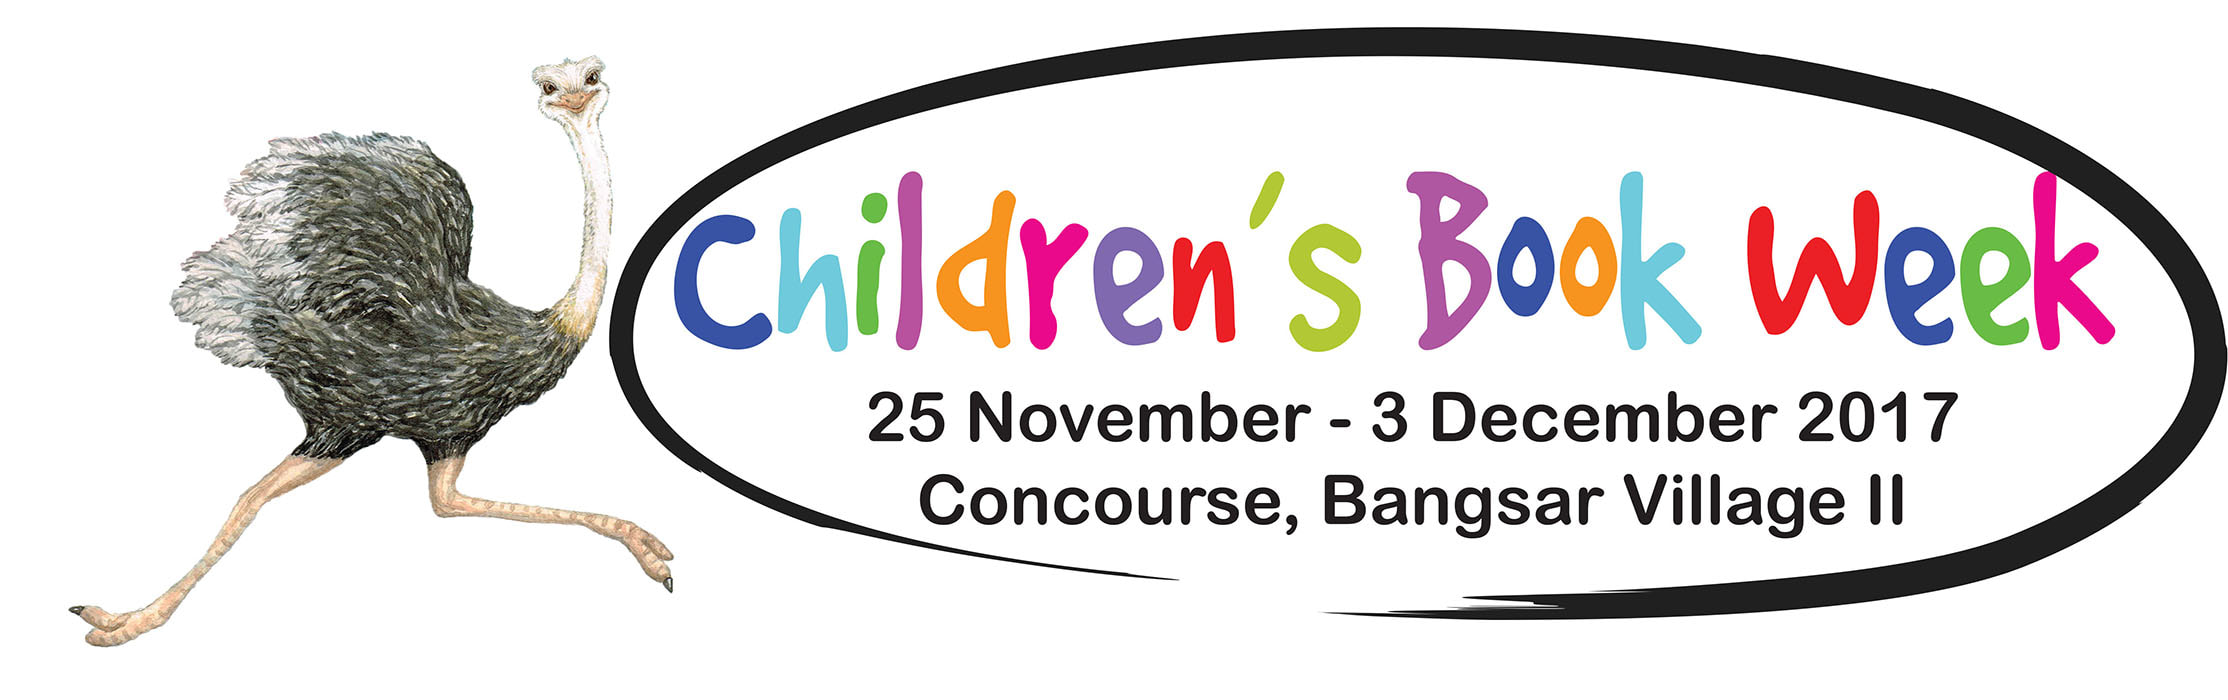 Children's Book Week 25 Nov - 3 Dec 2017 by Oyez!Books, Silverfish Books, Bangsar Village